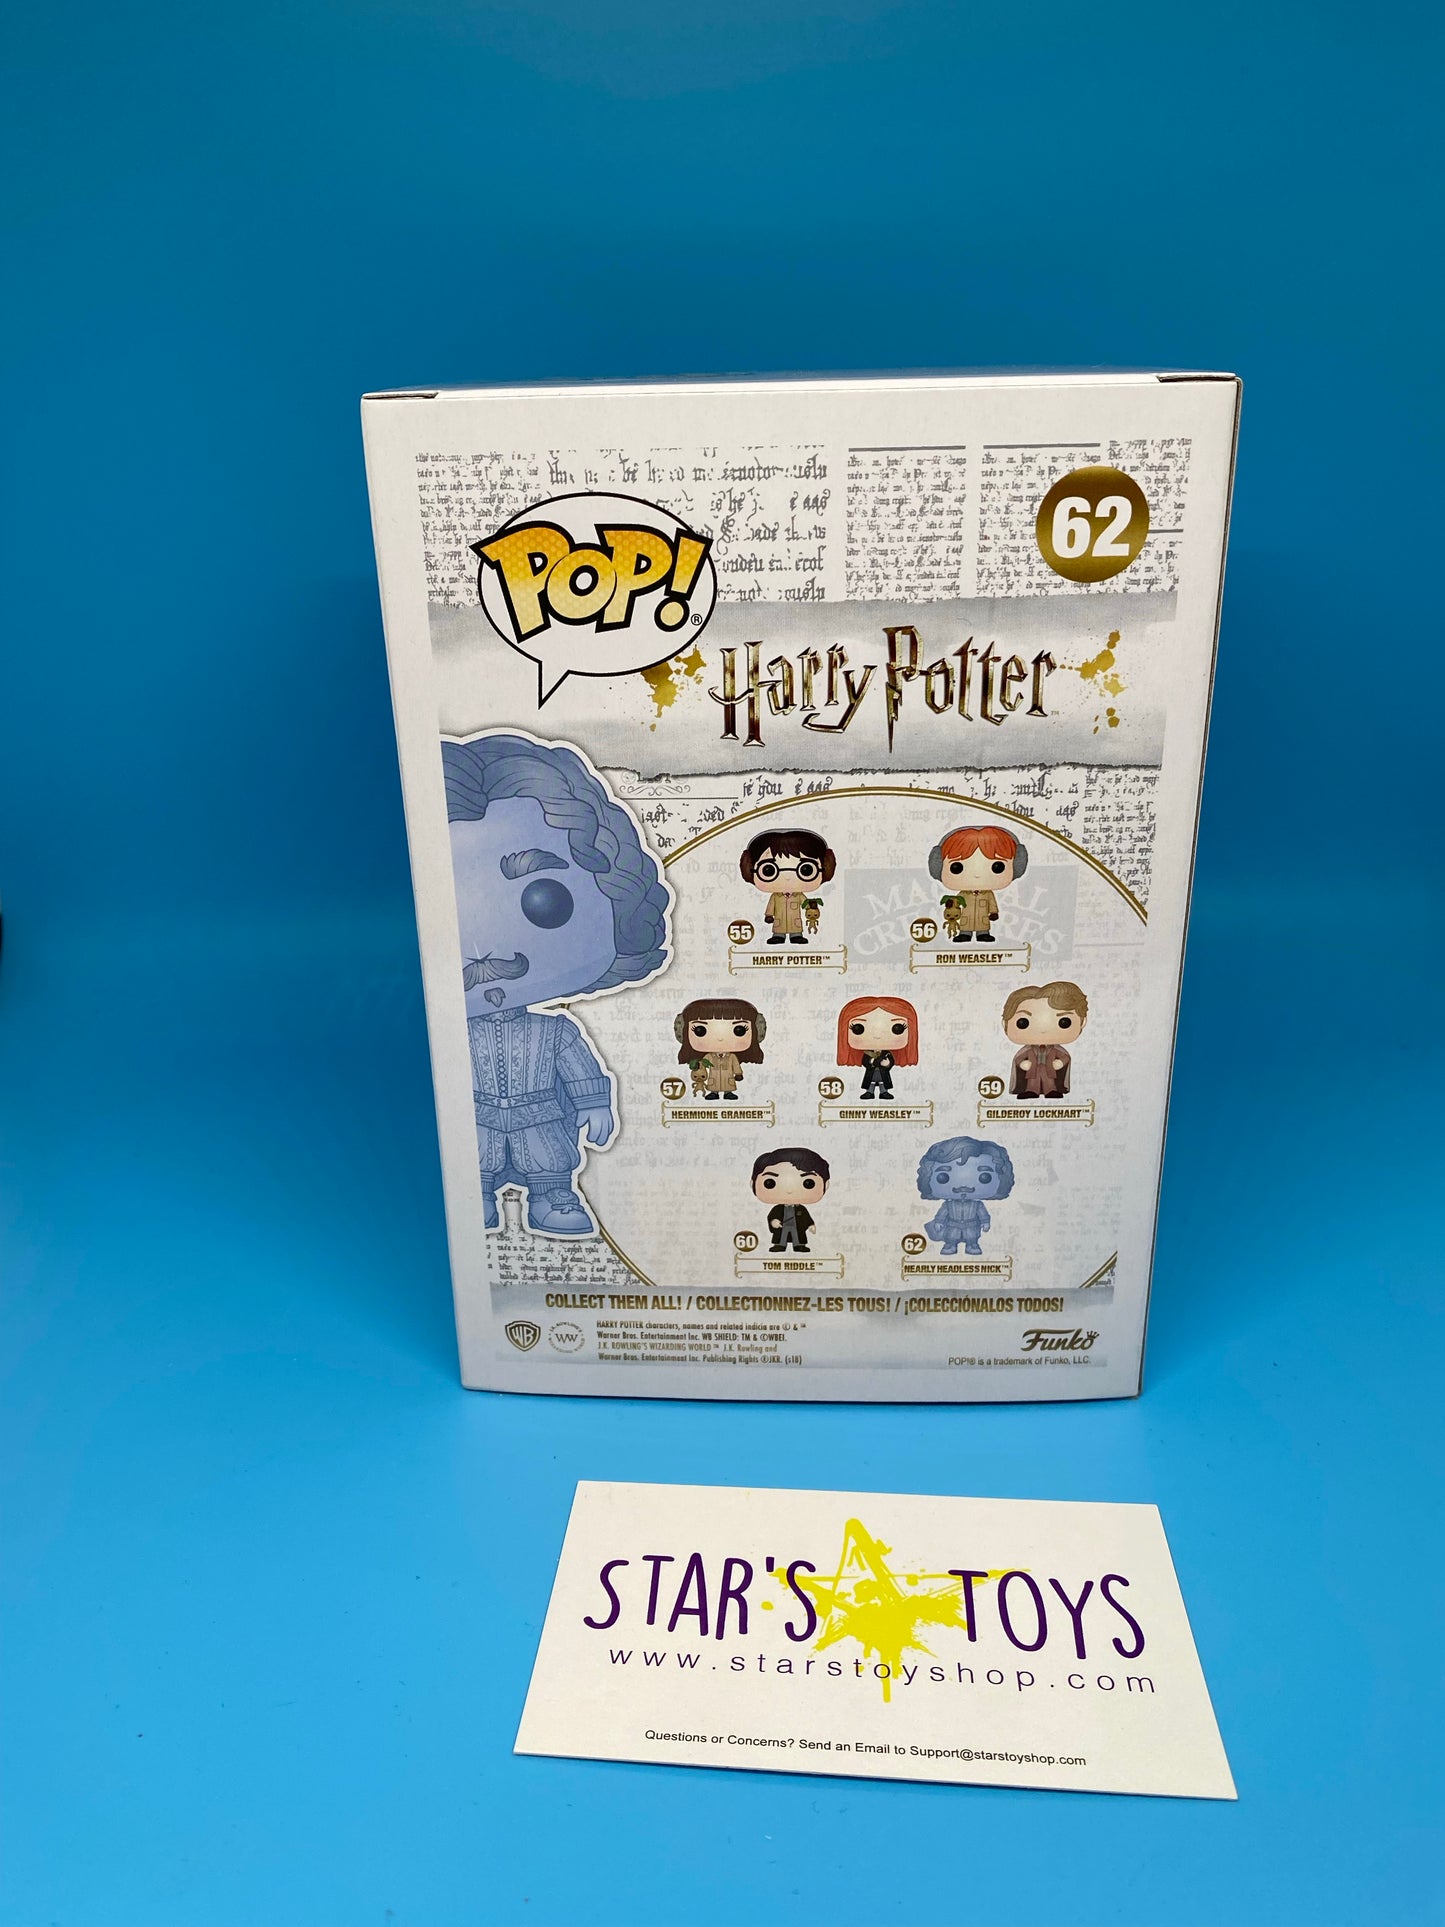 Pop HP: POP 56 Nearly Headless Nick (GW) - Star's Toy Shop